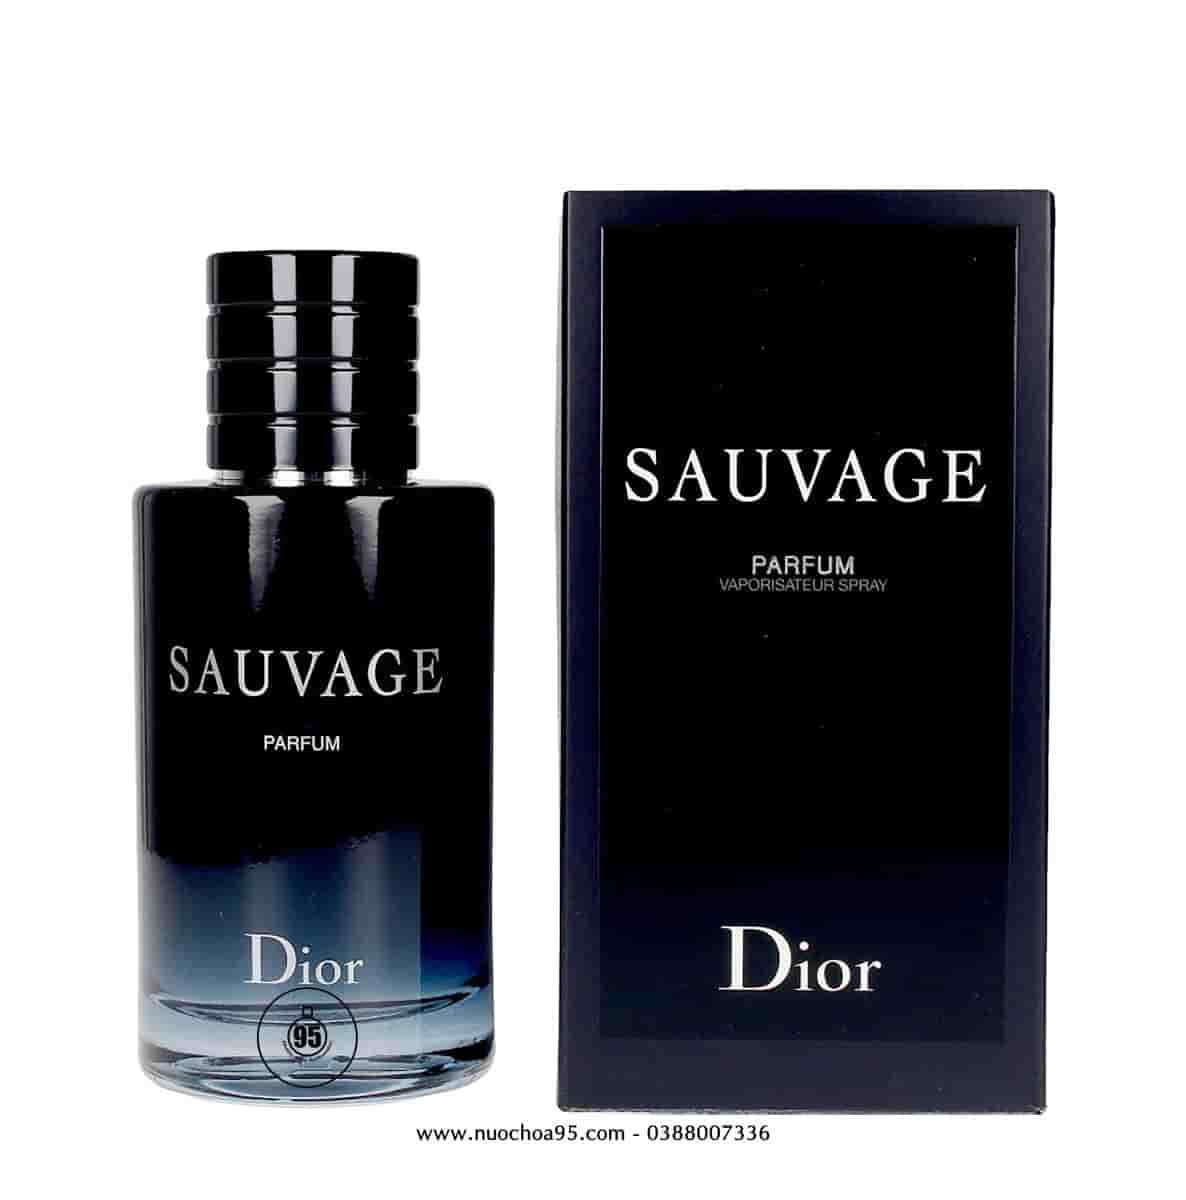 Nước hoa Sauvage Dior Parfum